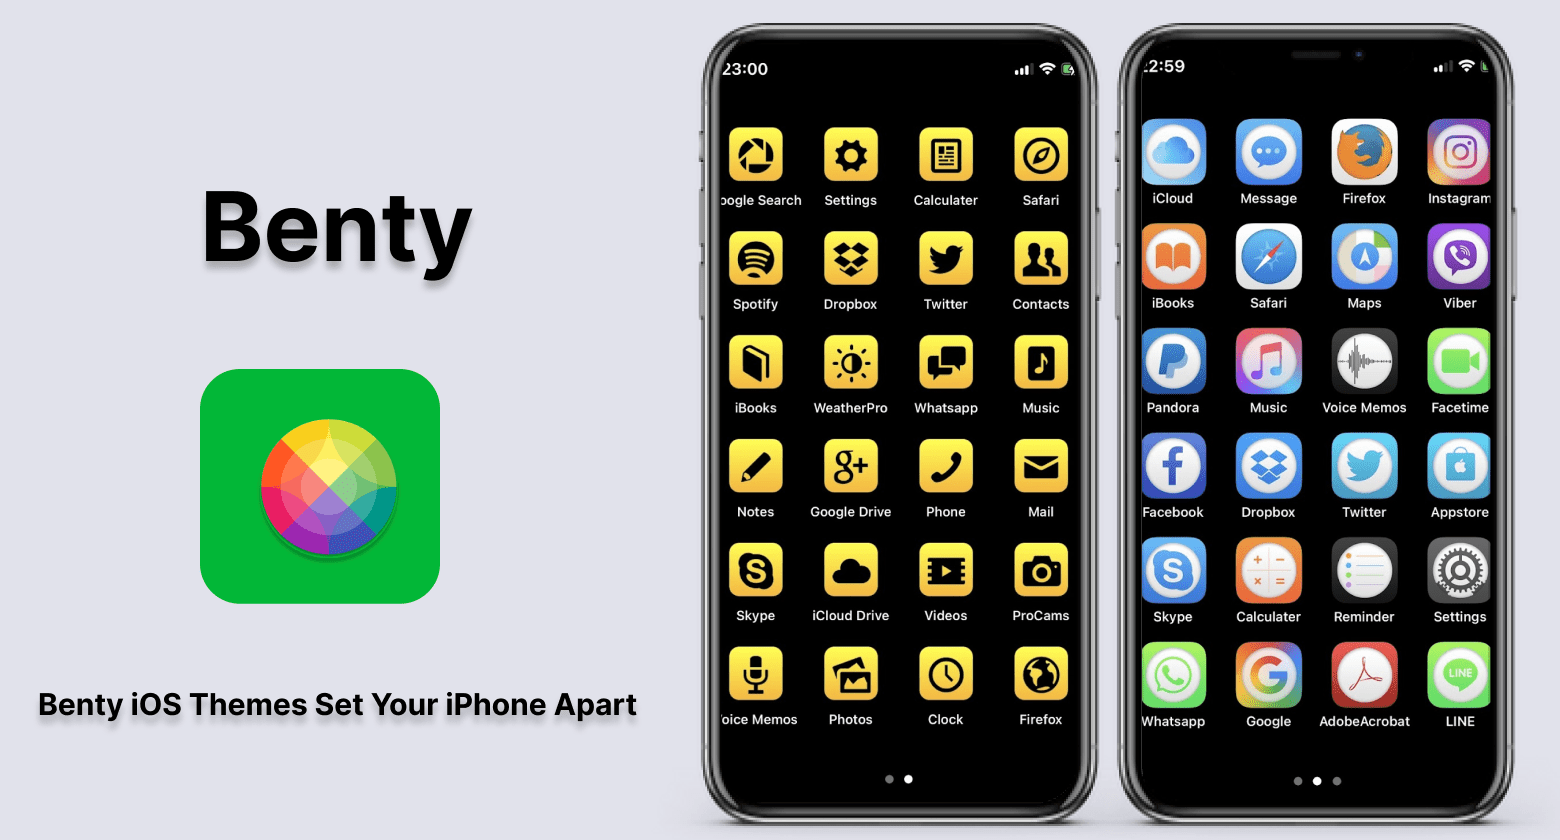 Benty iOS Themes